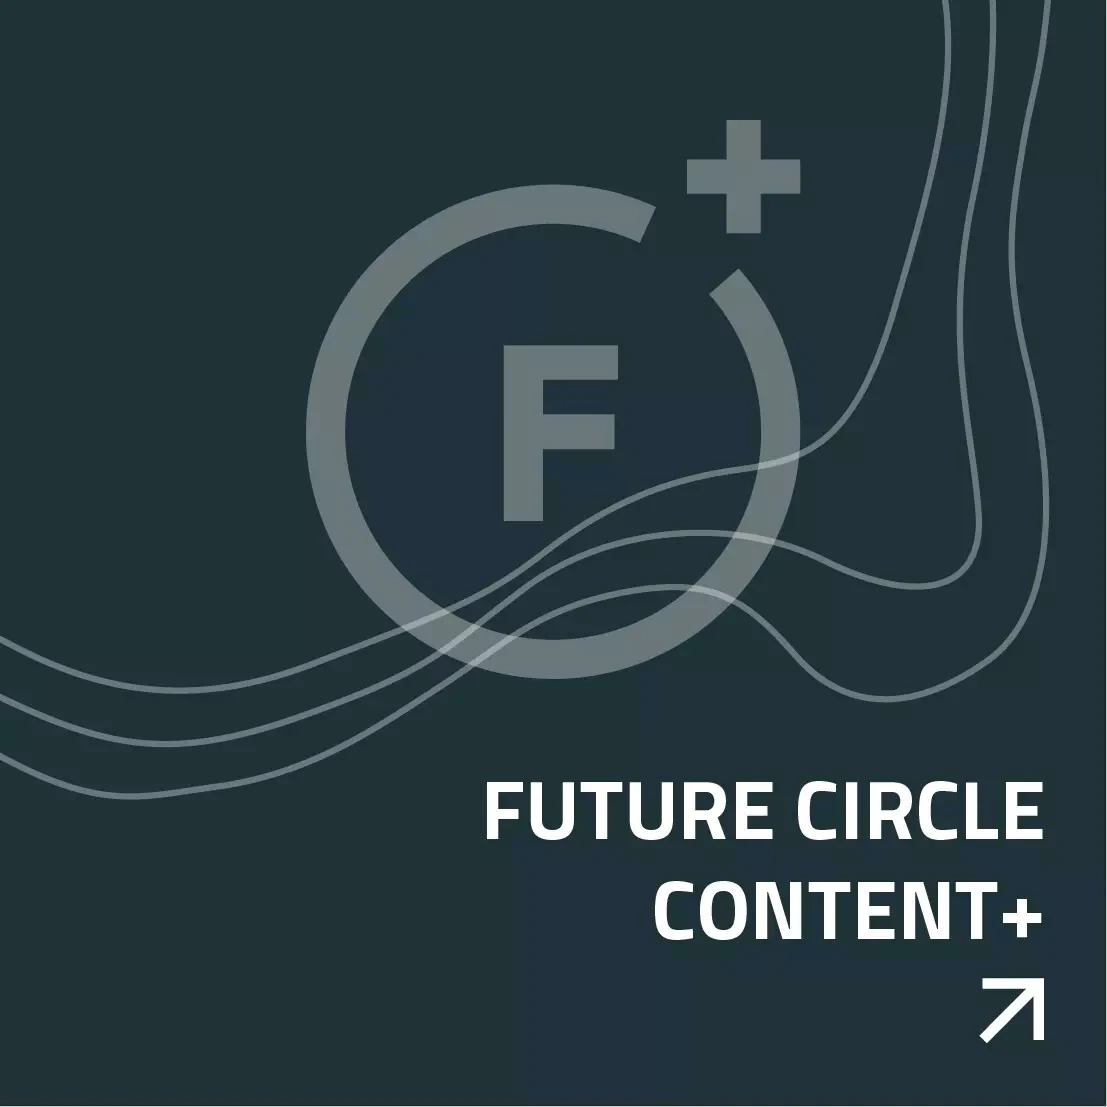 Future-Circle-Mitgliedschaft Content+